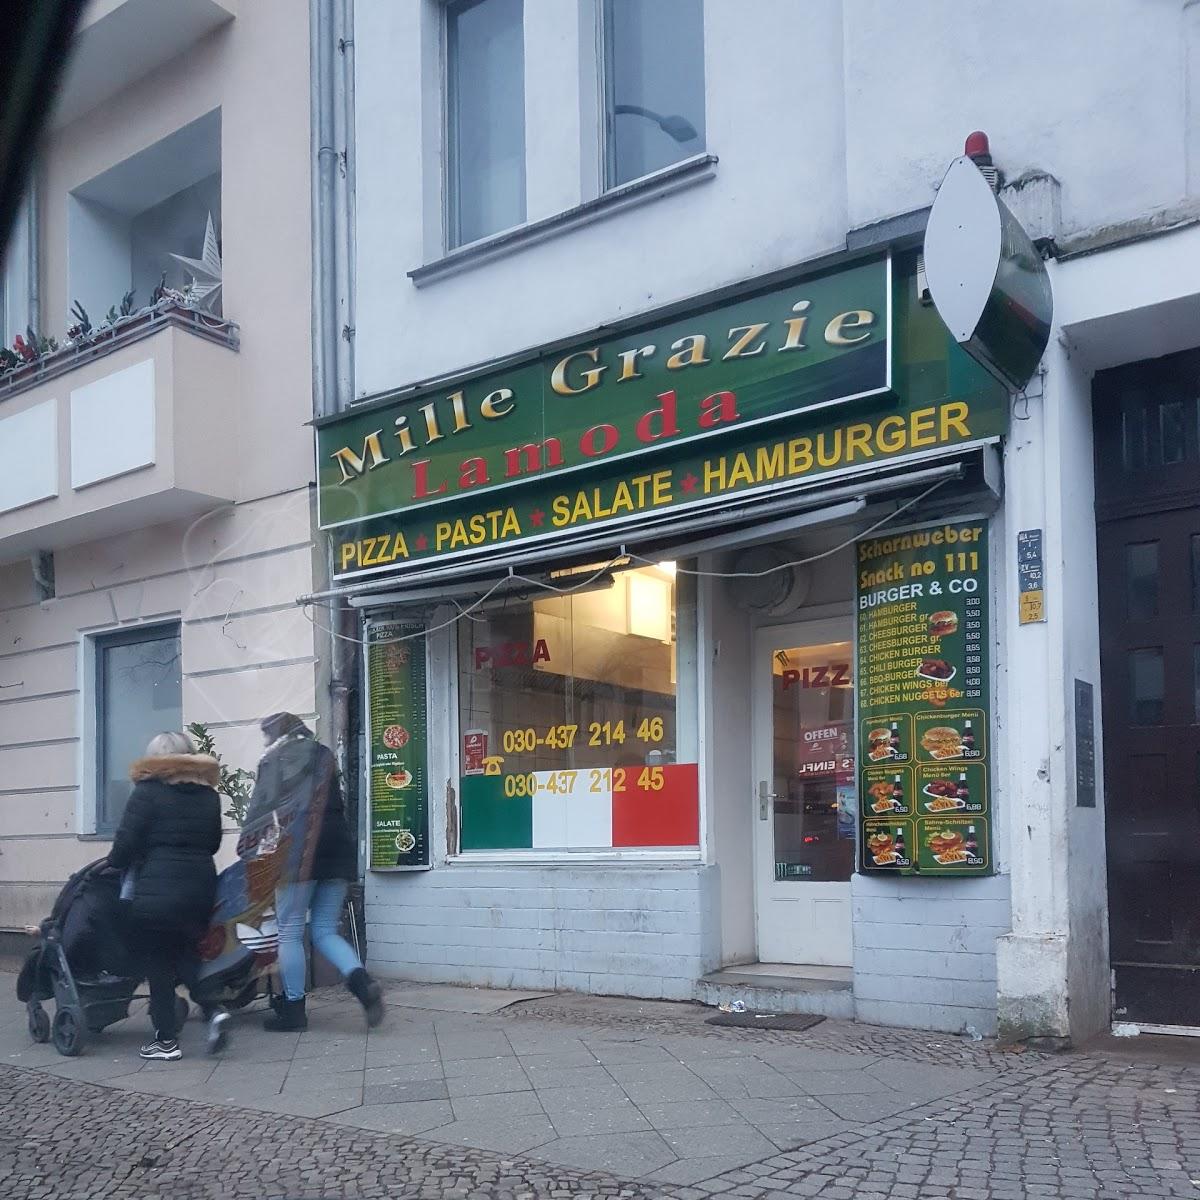 Restaurant "Mille Grazie" in Berlin